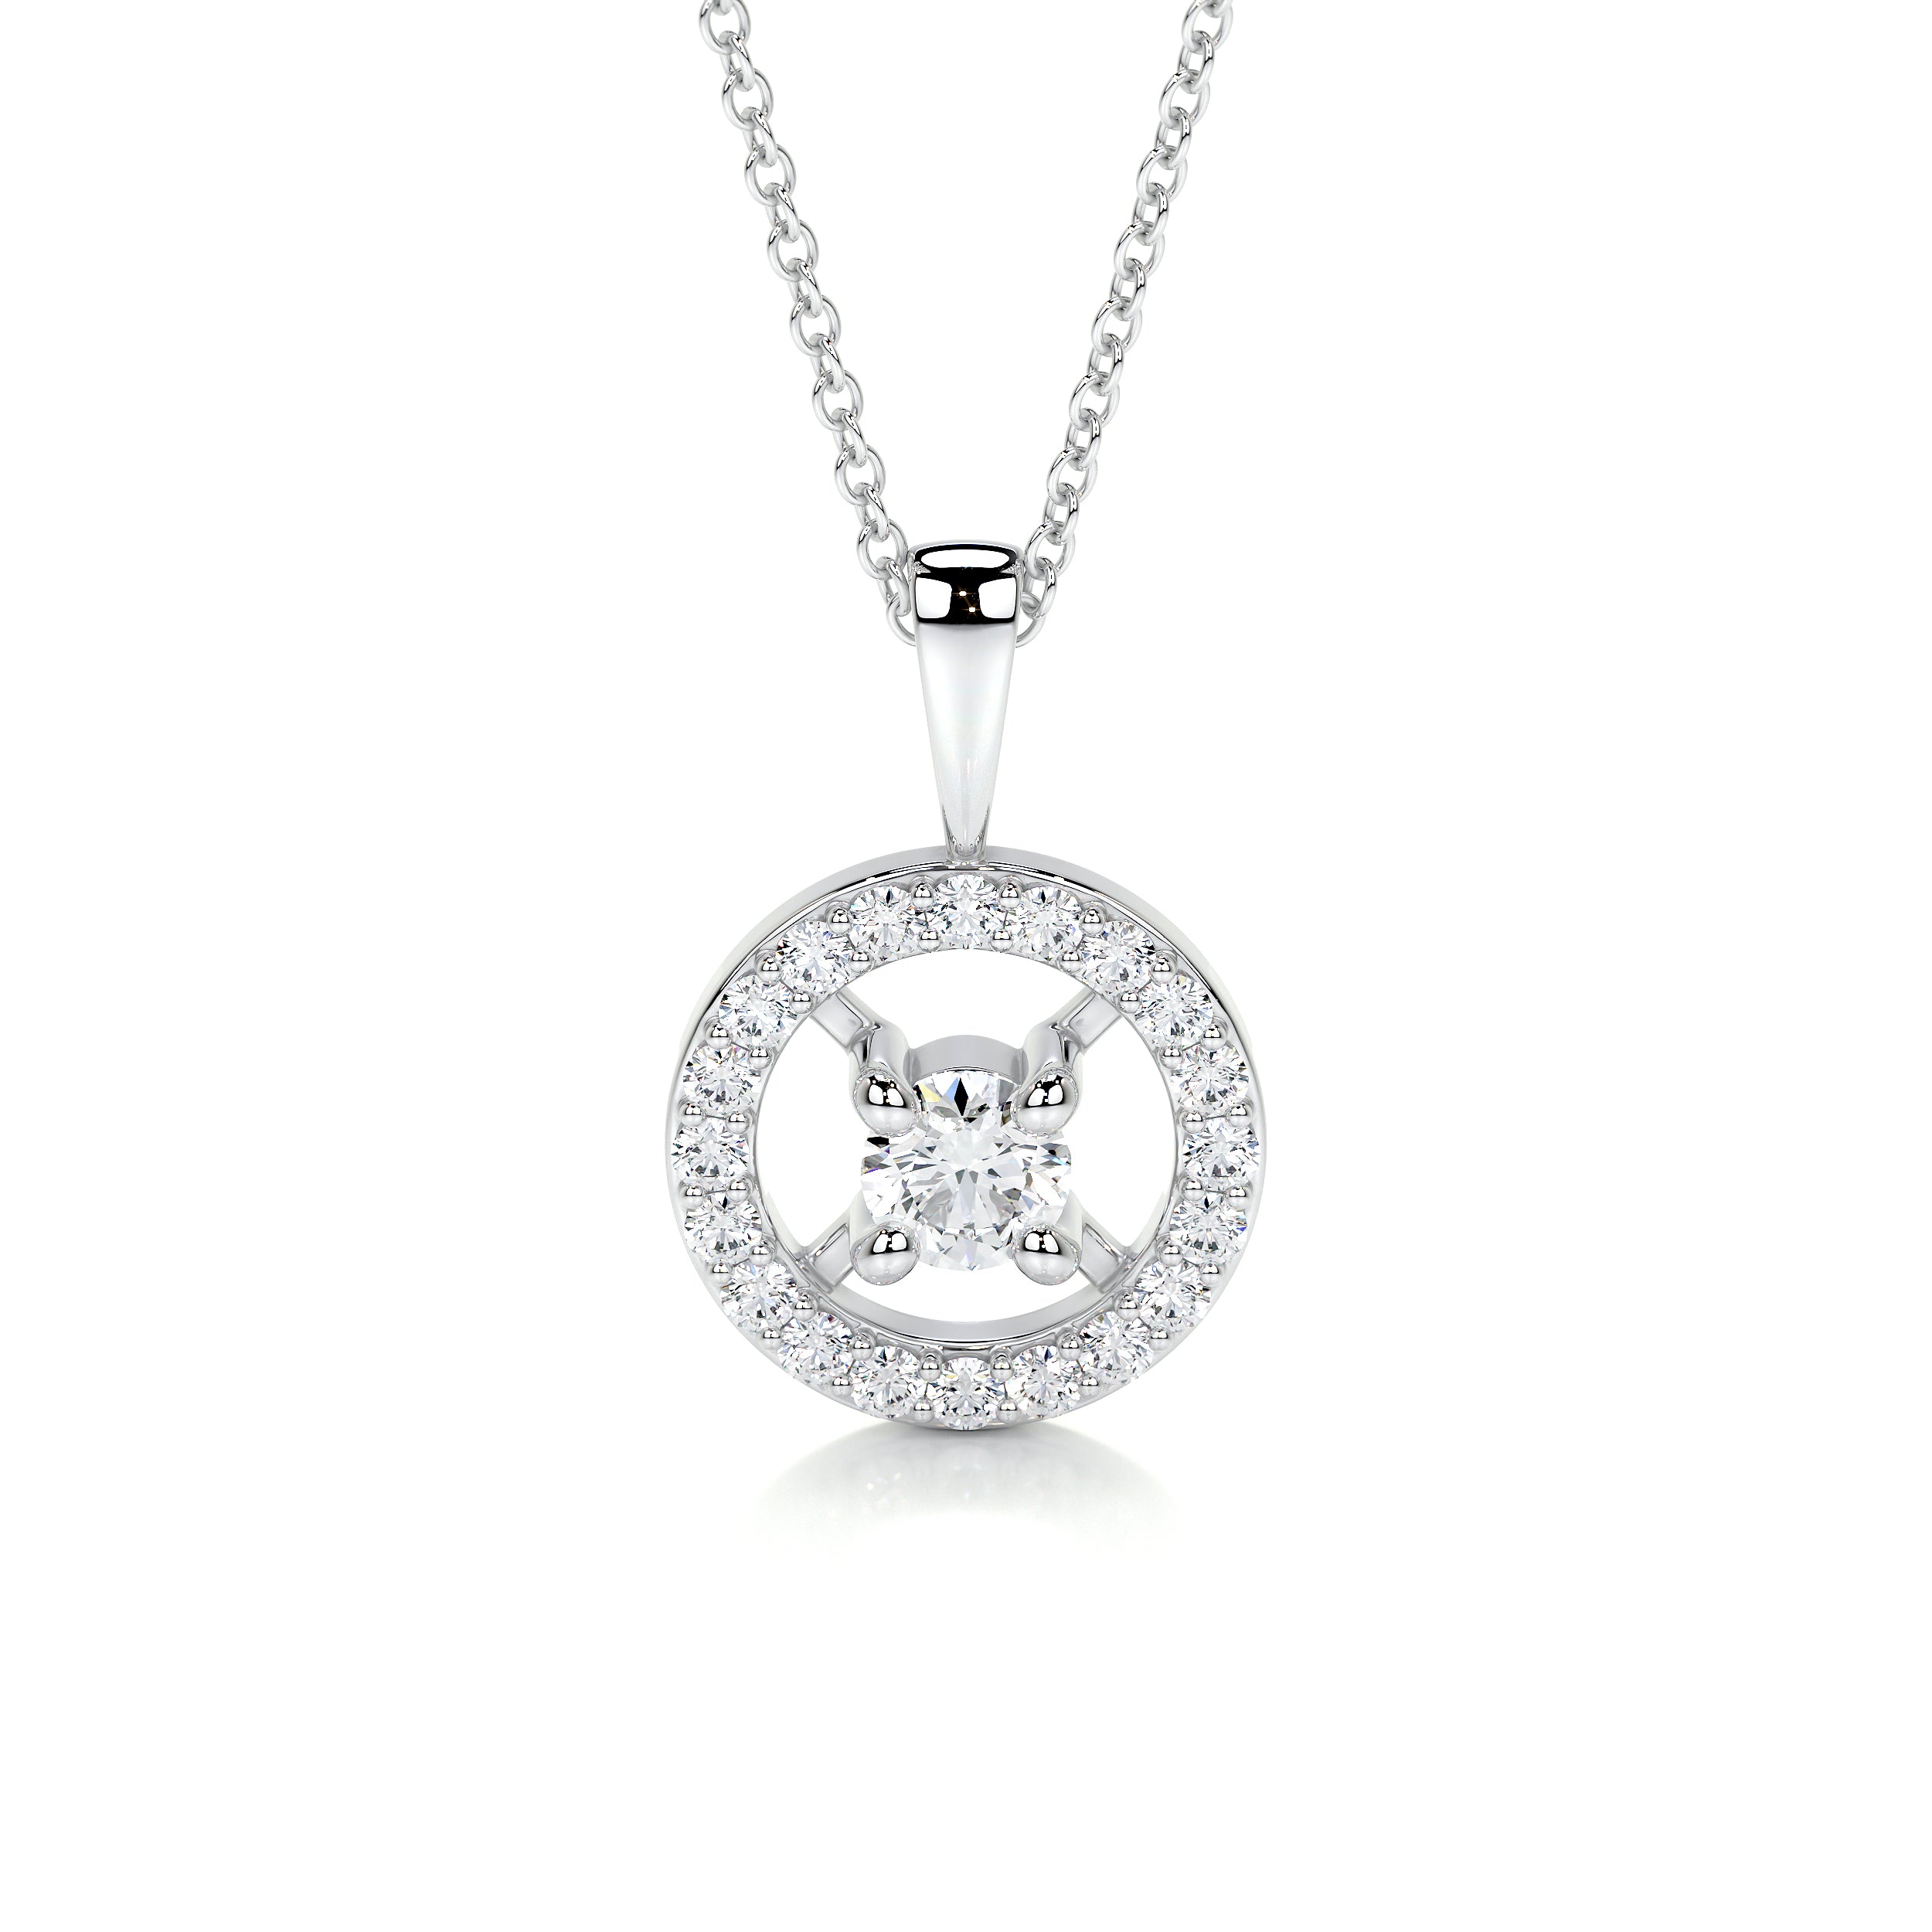 Aspen Diamond Pendant   (0.6 Carat) -14K White Gold